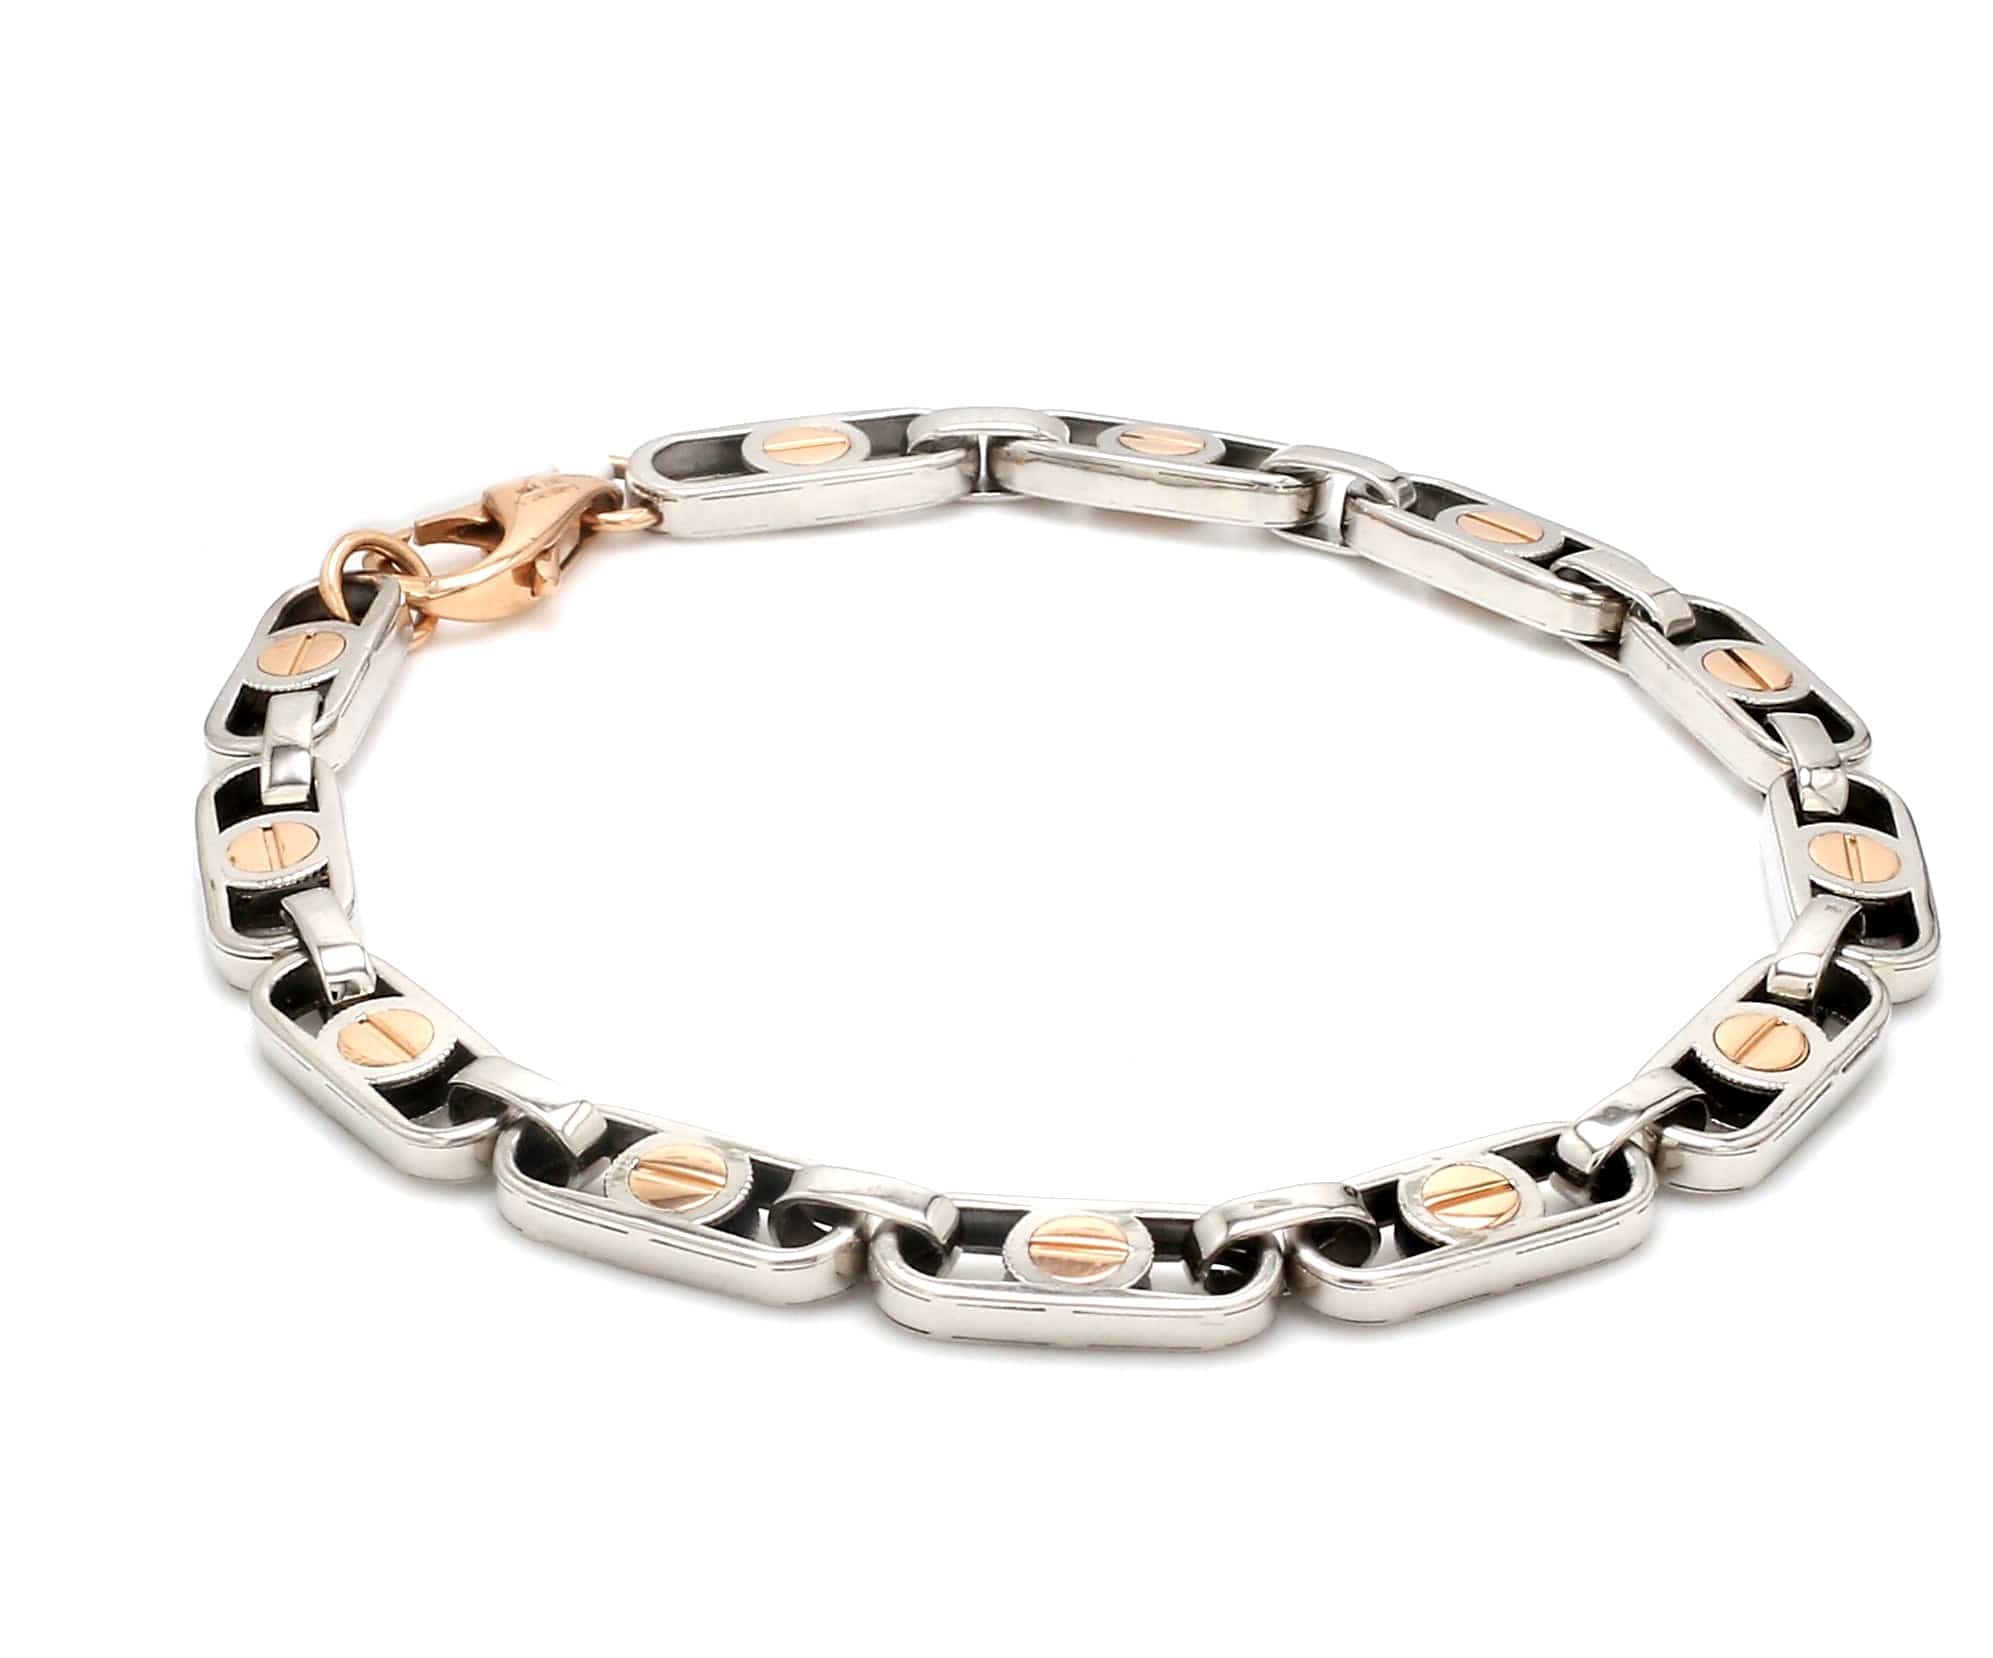 Ornate Men's Stainless Steel Bracelet Fashion Wrist Band CZ (Gold) – JB  Jewelry BLVD